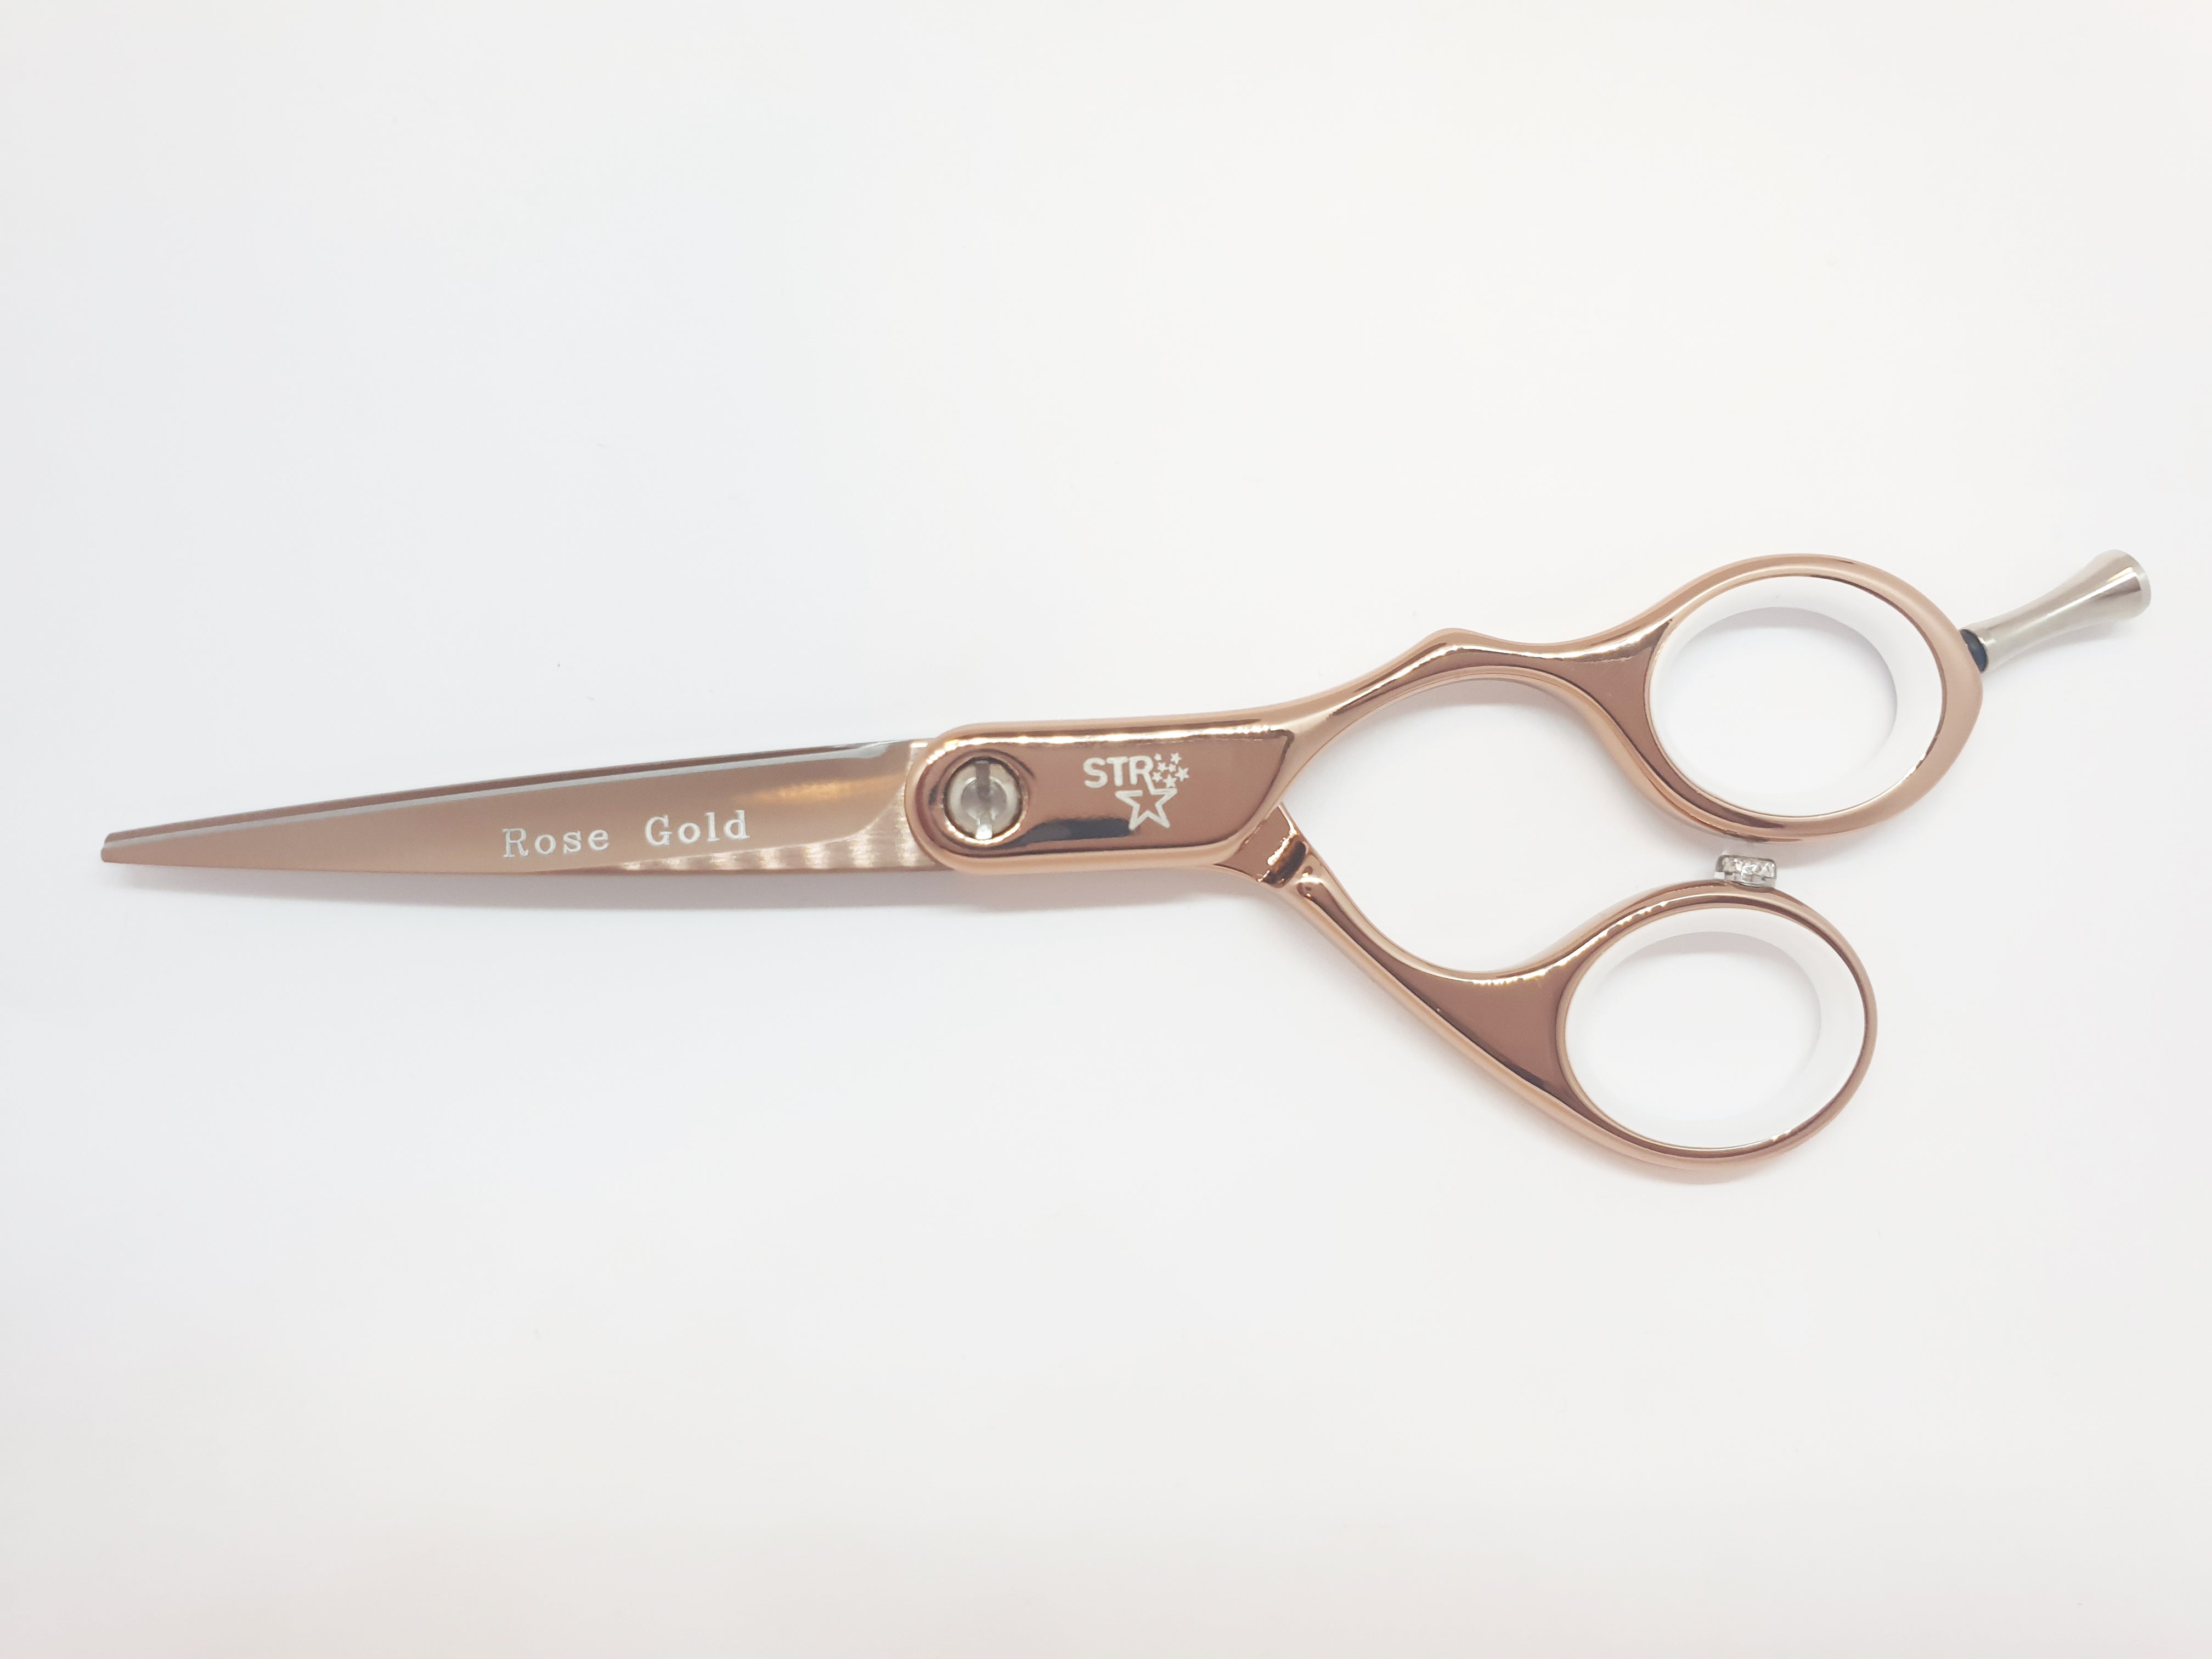 5.5" Str Rose Gold scissors